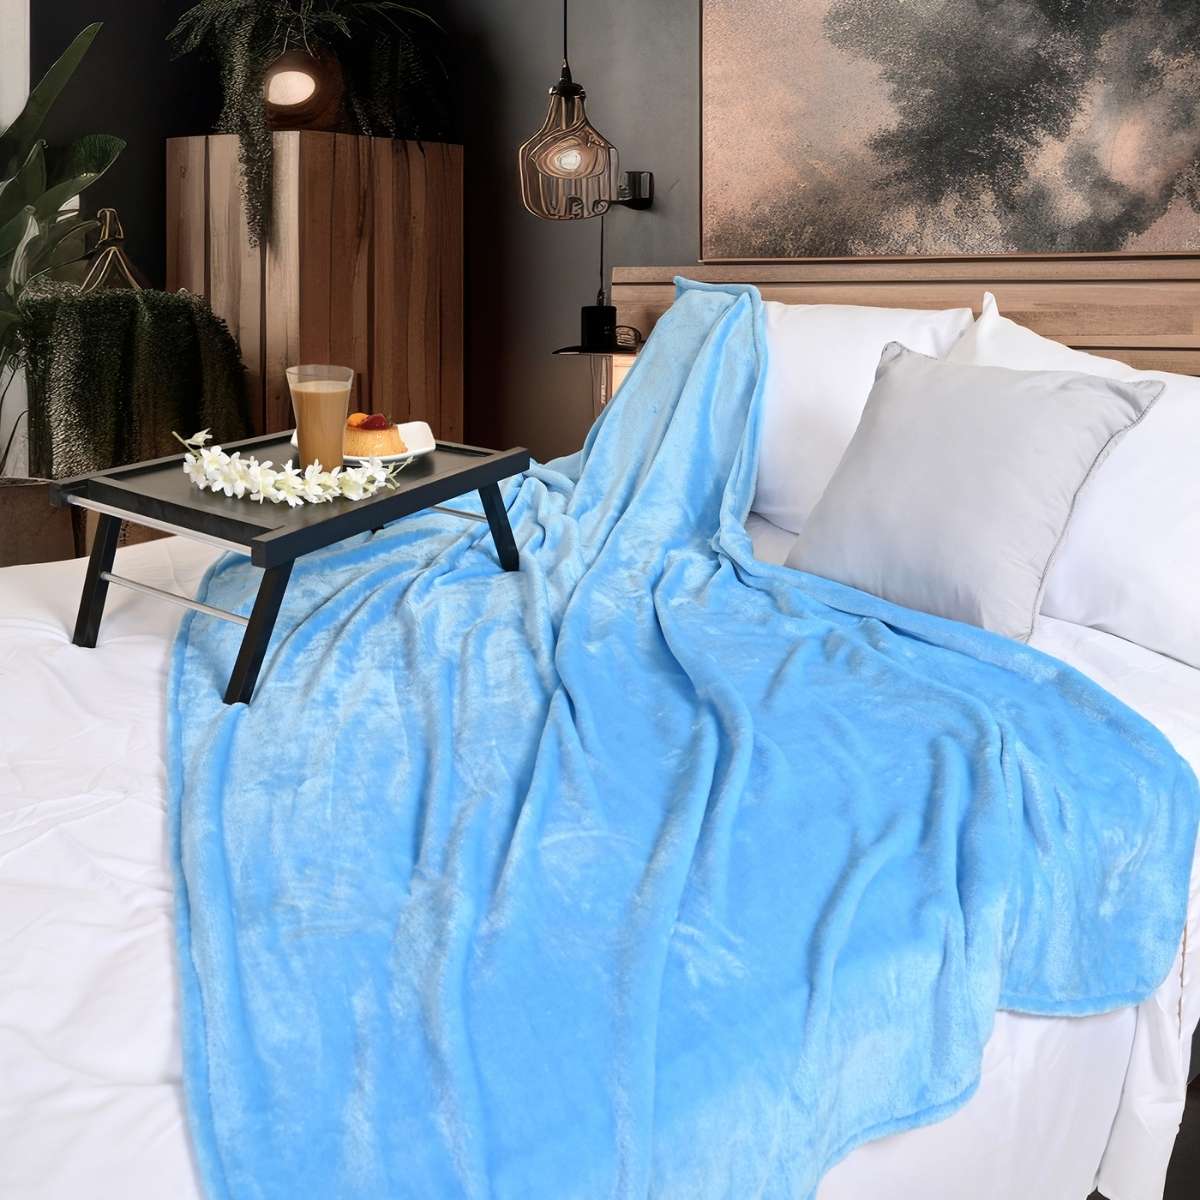 Cobija de flanel color turquesa tamaño individual tendida sobre una cama"